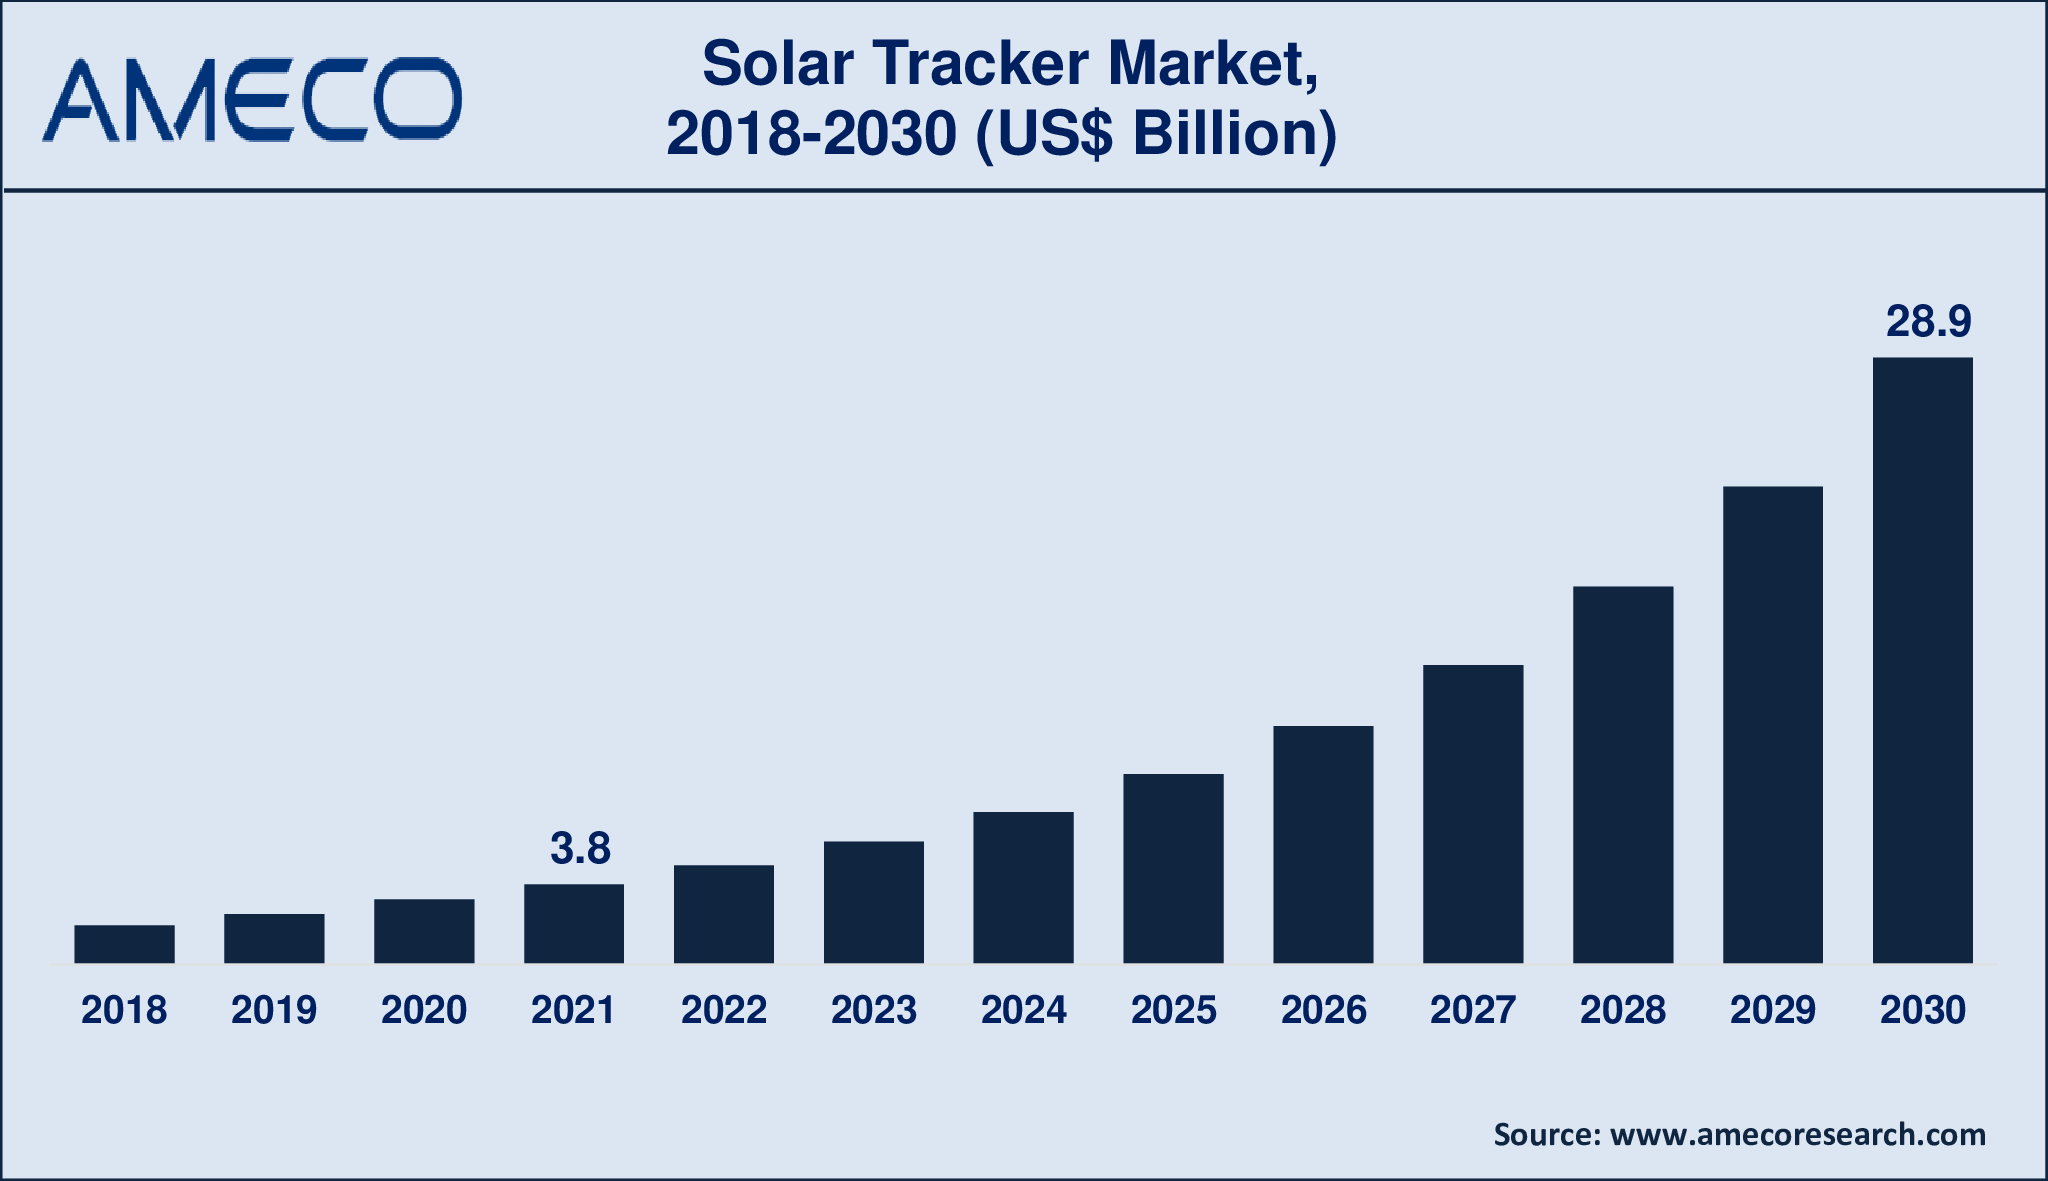 Solar Tracker Market Analysis Period